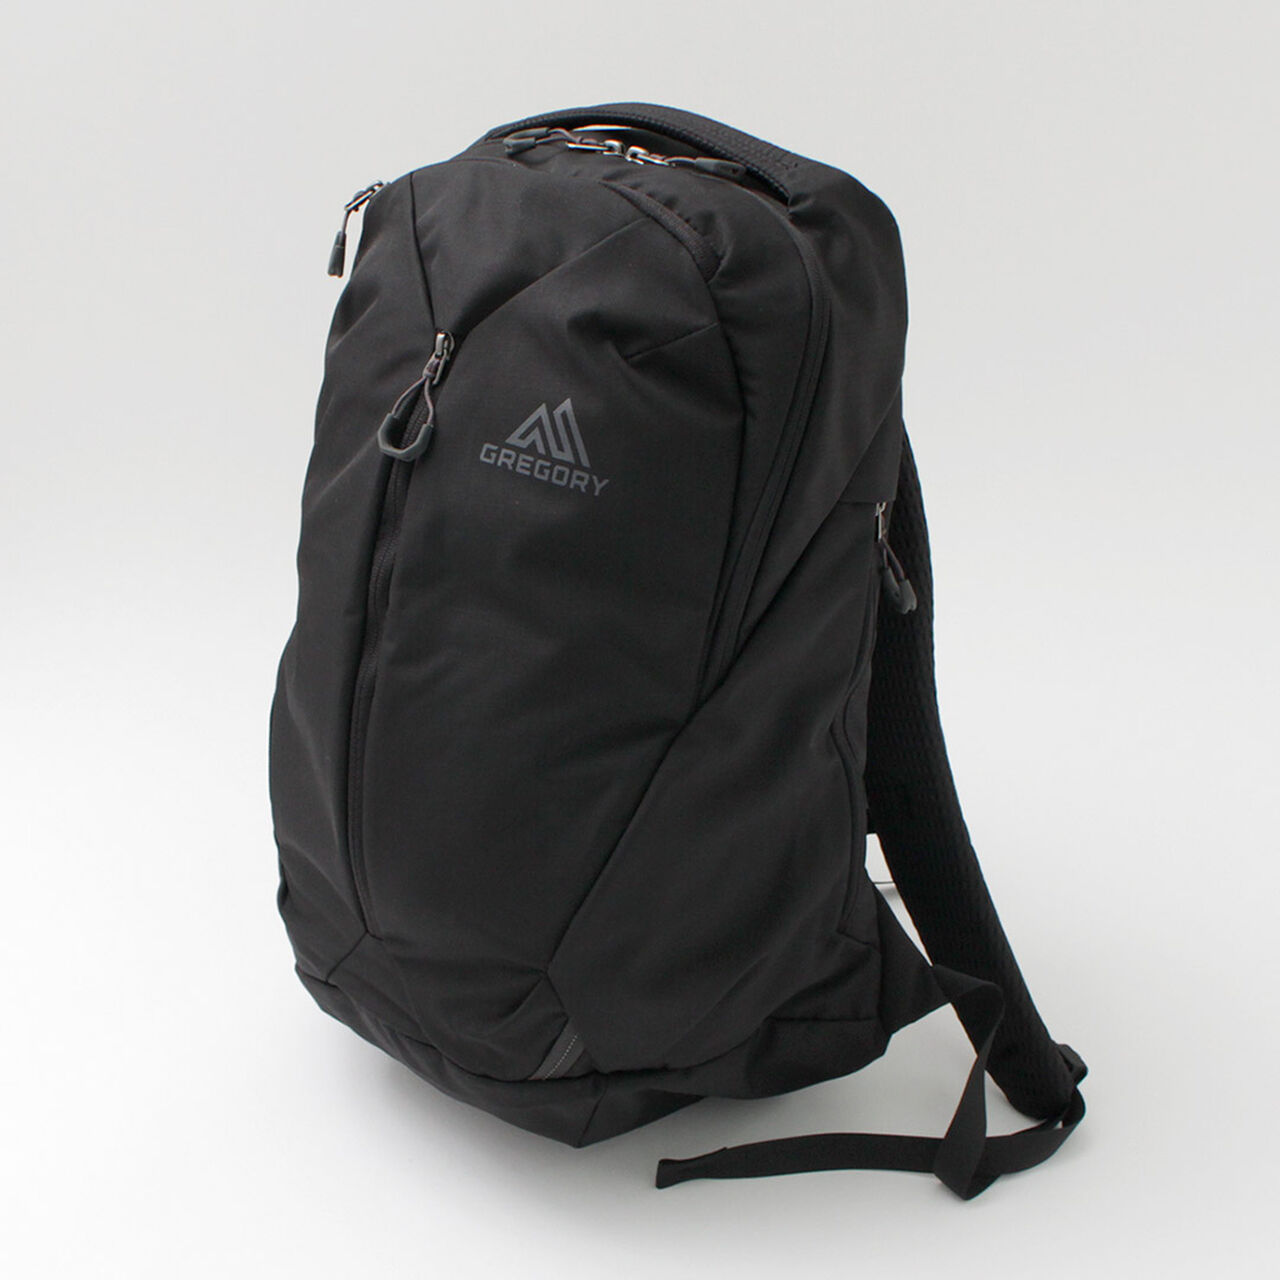 RHUNE 20 backpack,, large image number 0